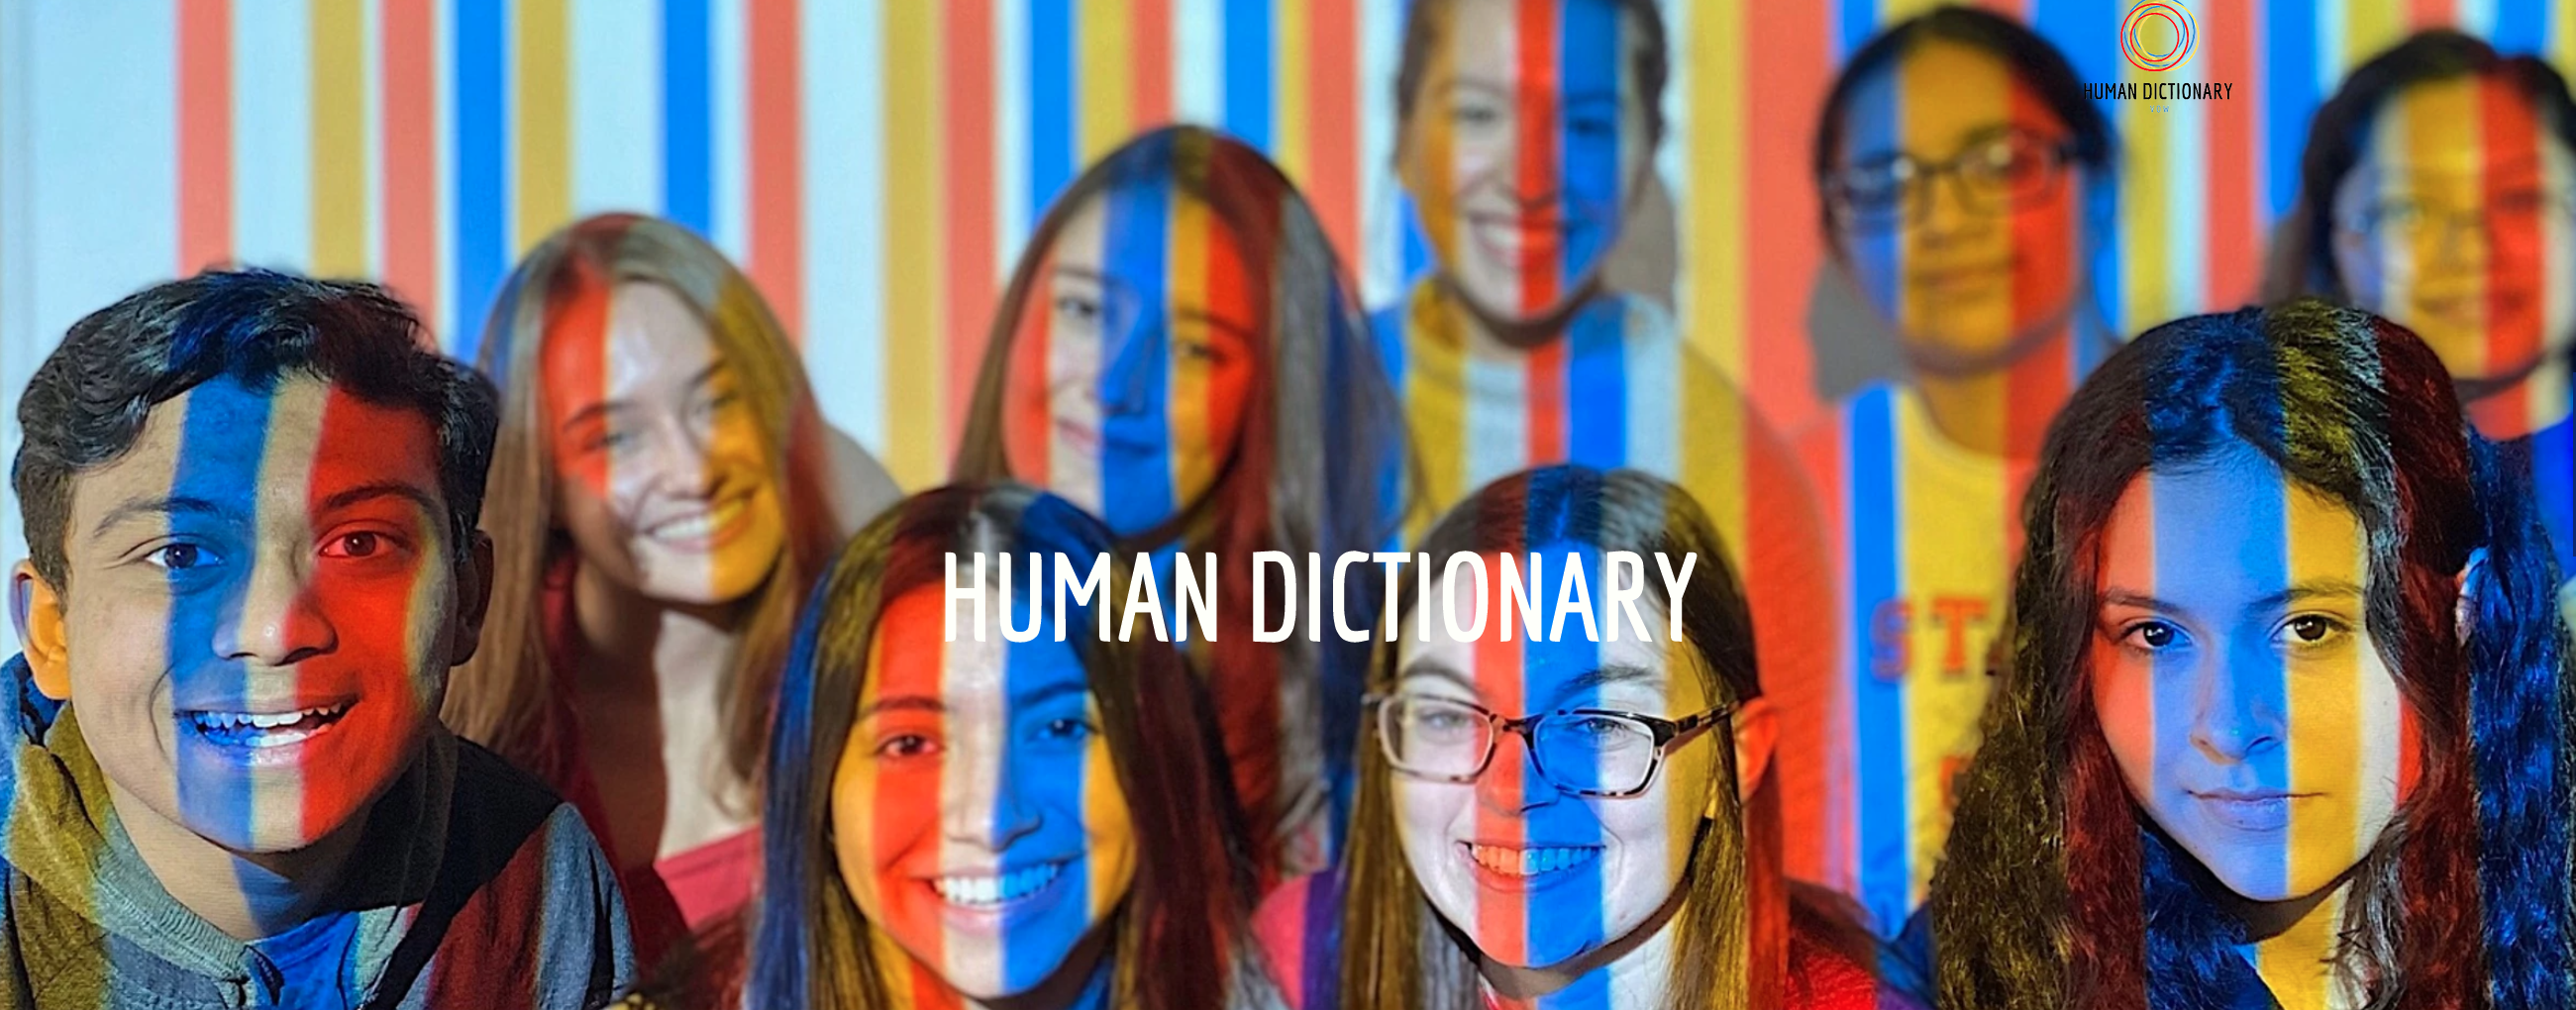 Human Dictionary team